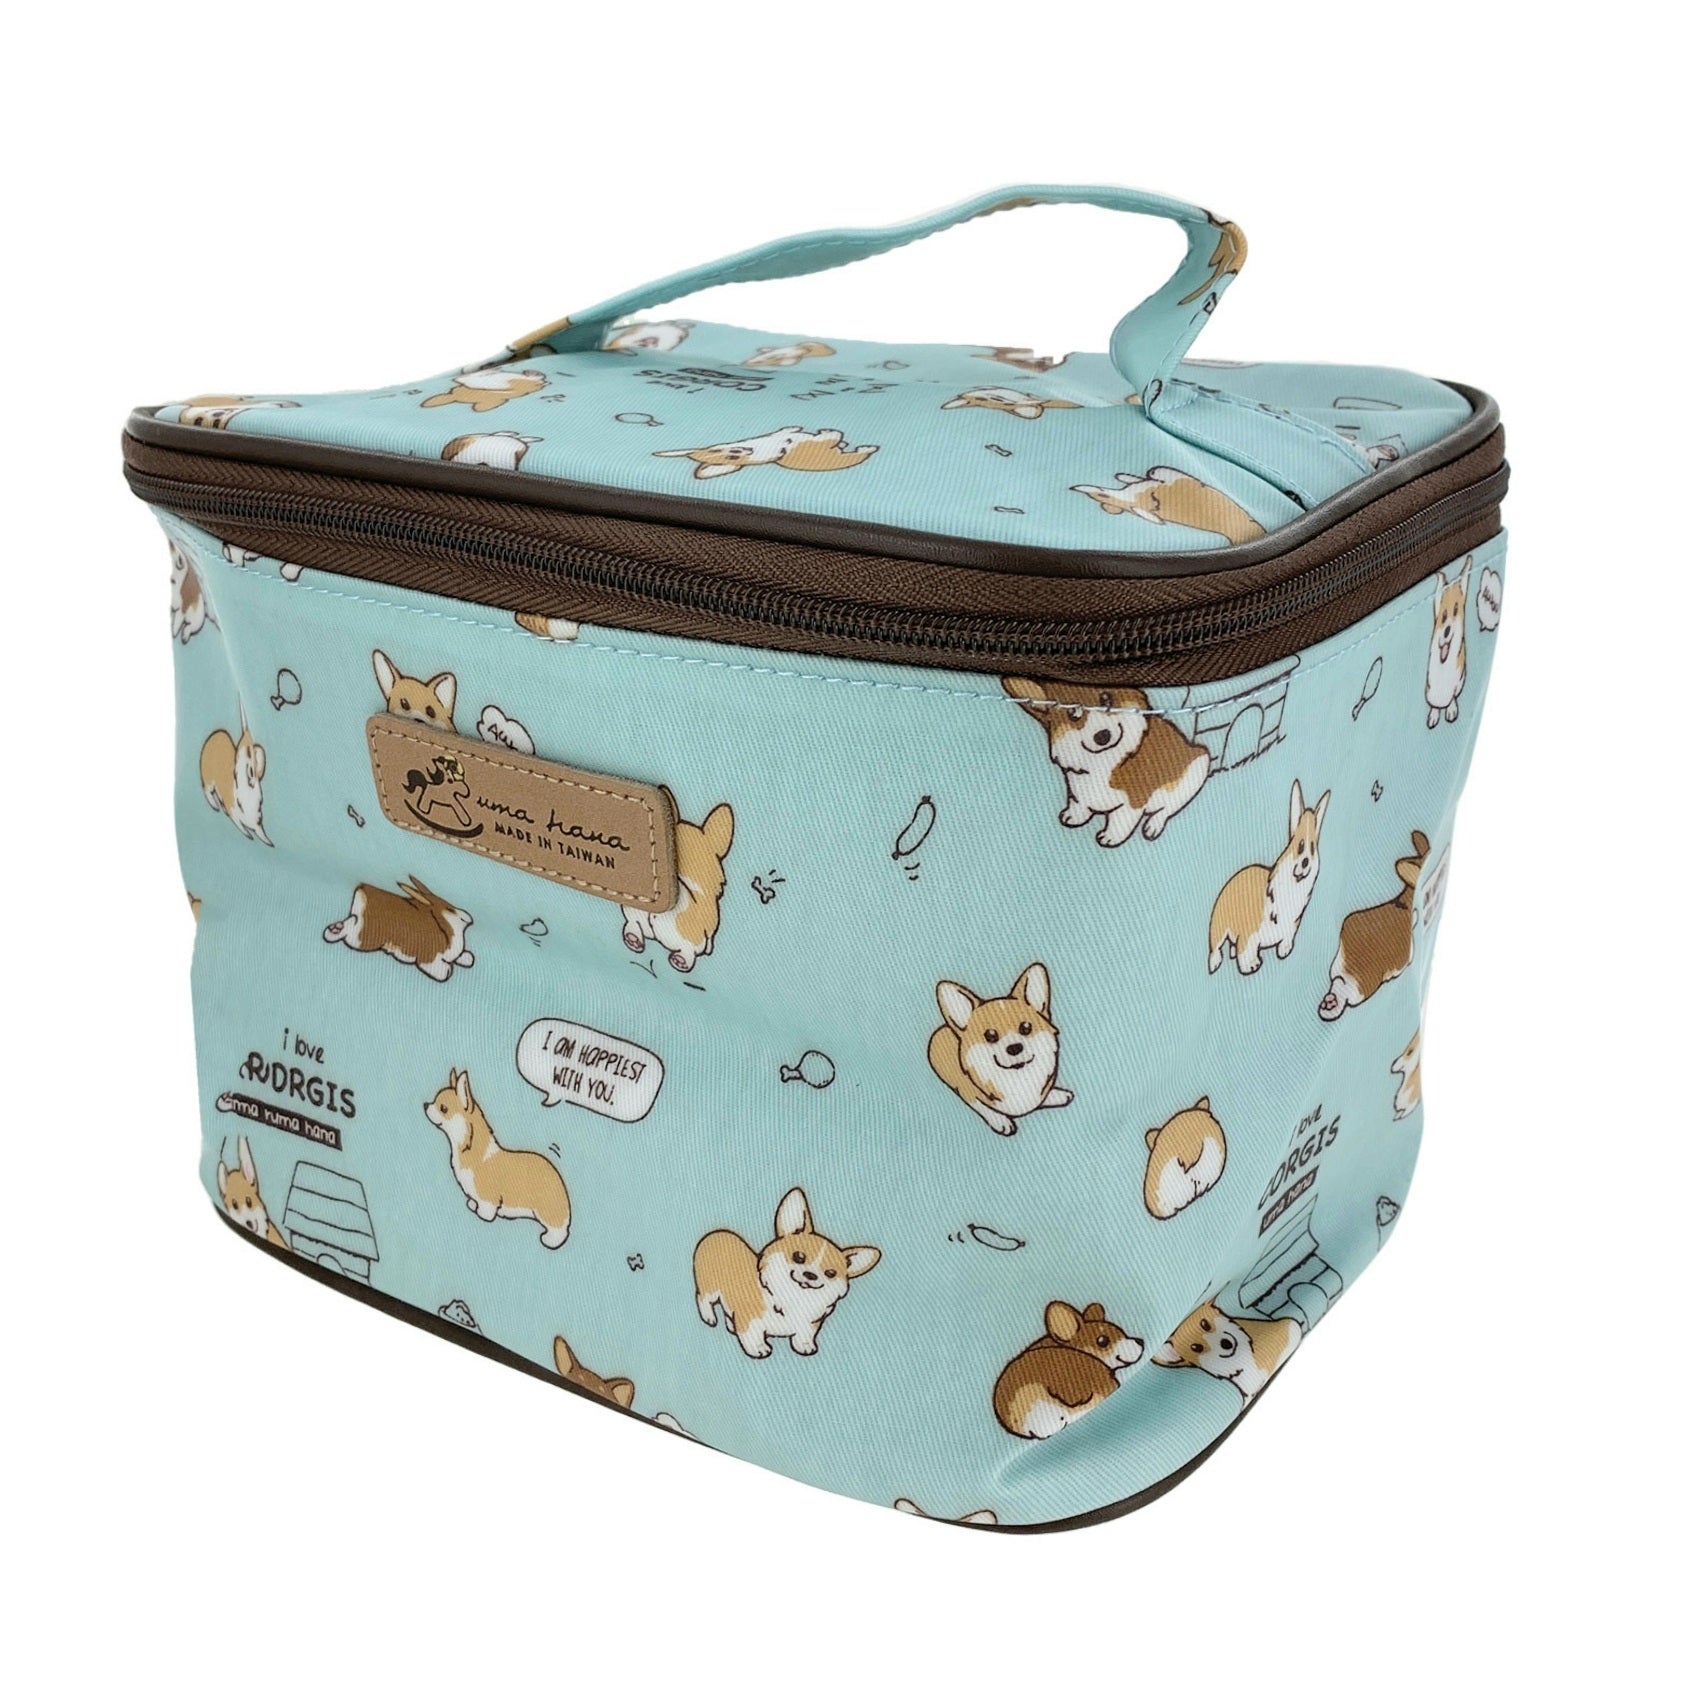 Teal Corgi Puppy Travel Cosmetic Bag